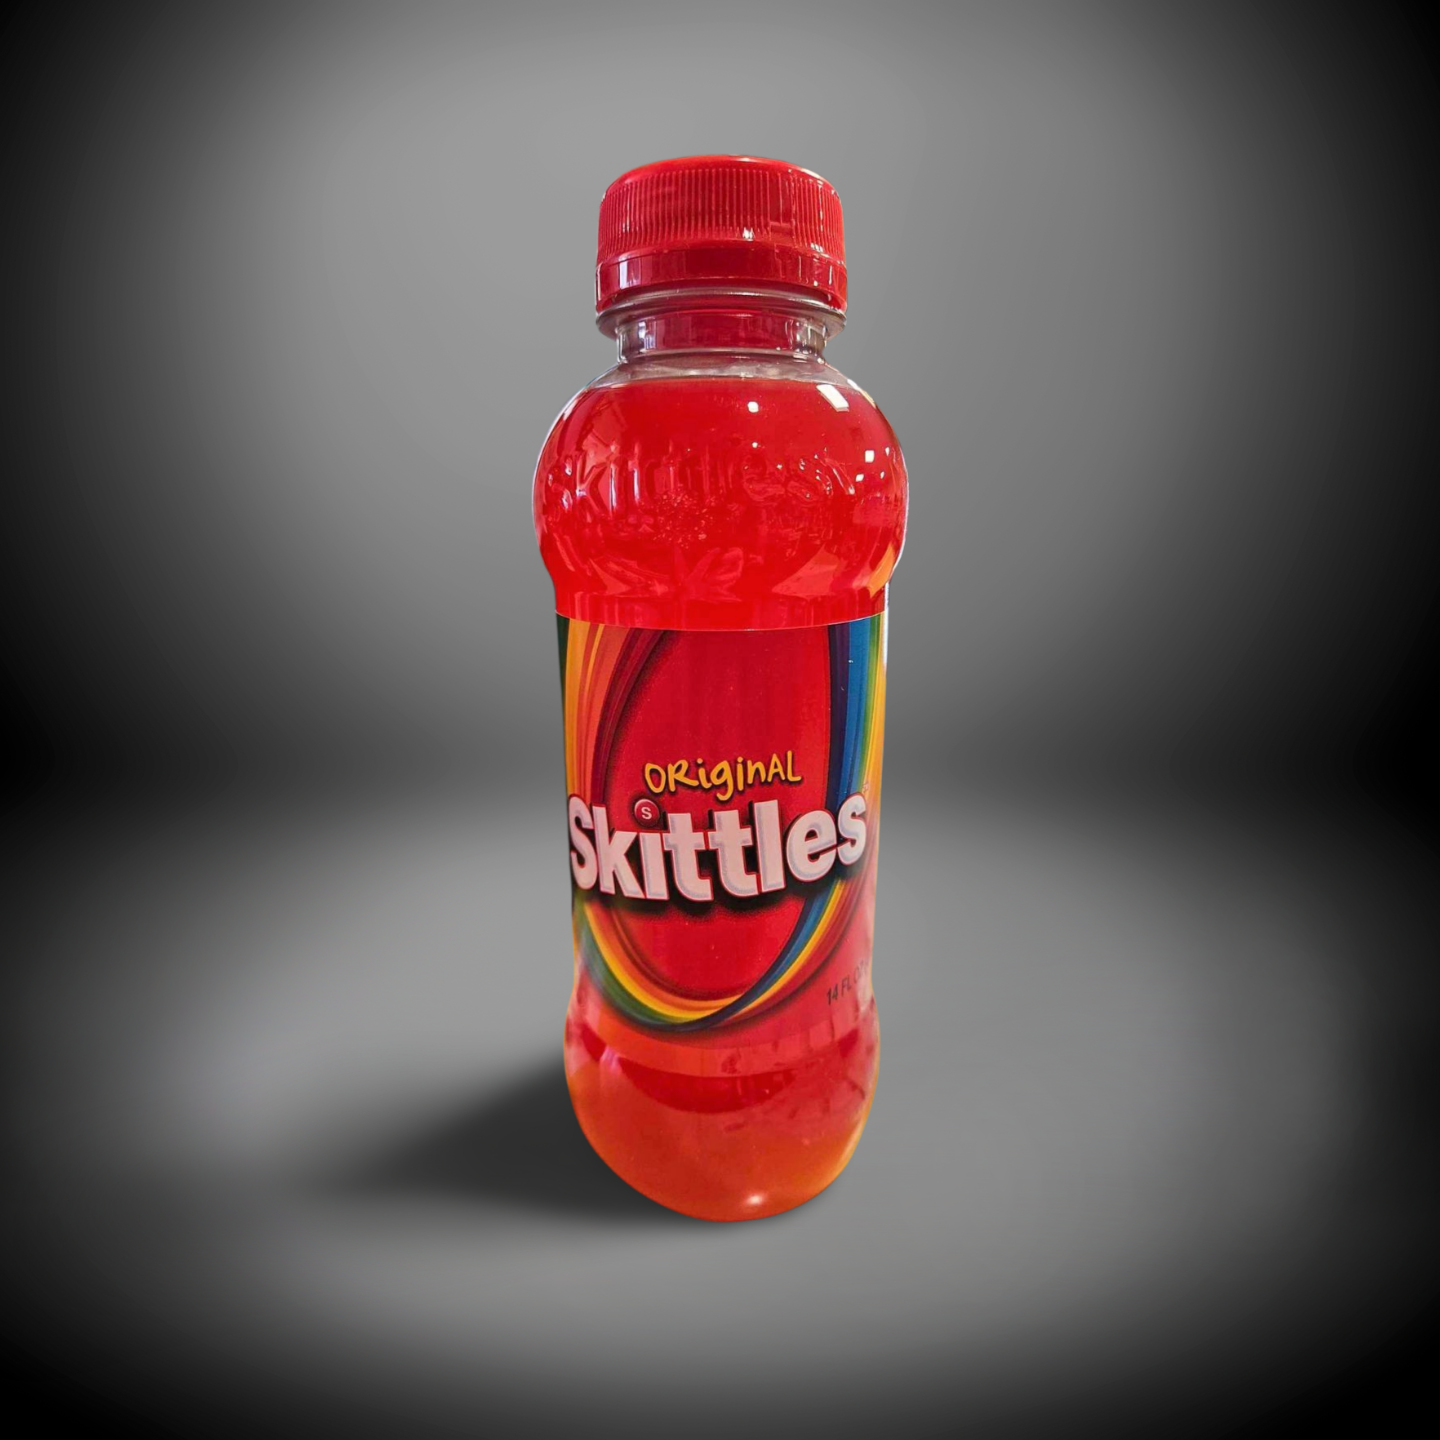 Skittles Drinks - Taste the Rainbow - Dusty's Country Store